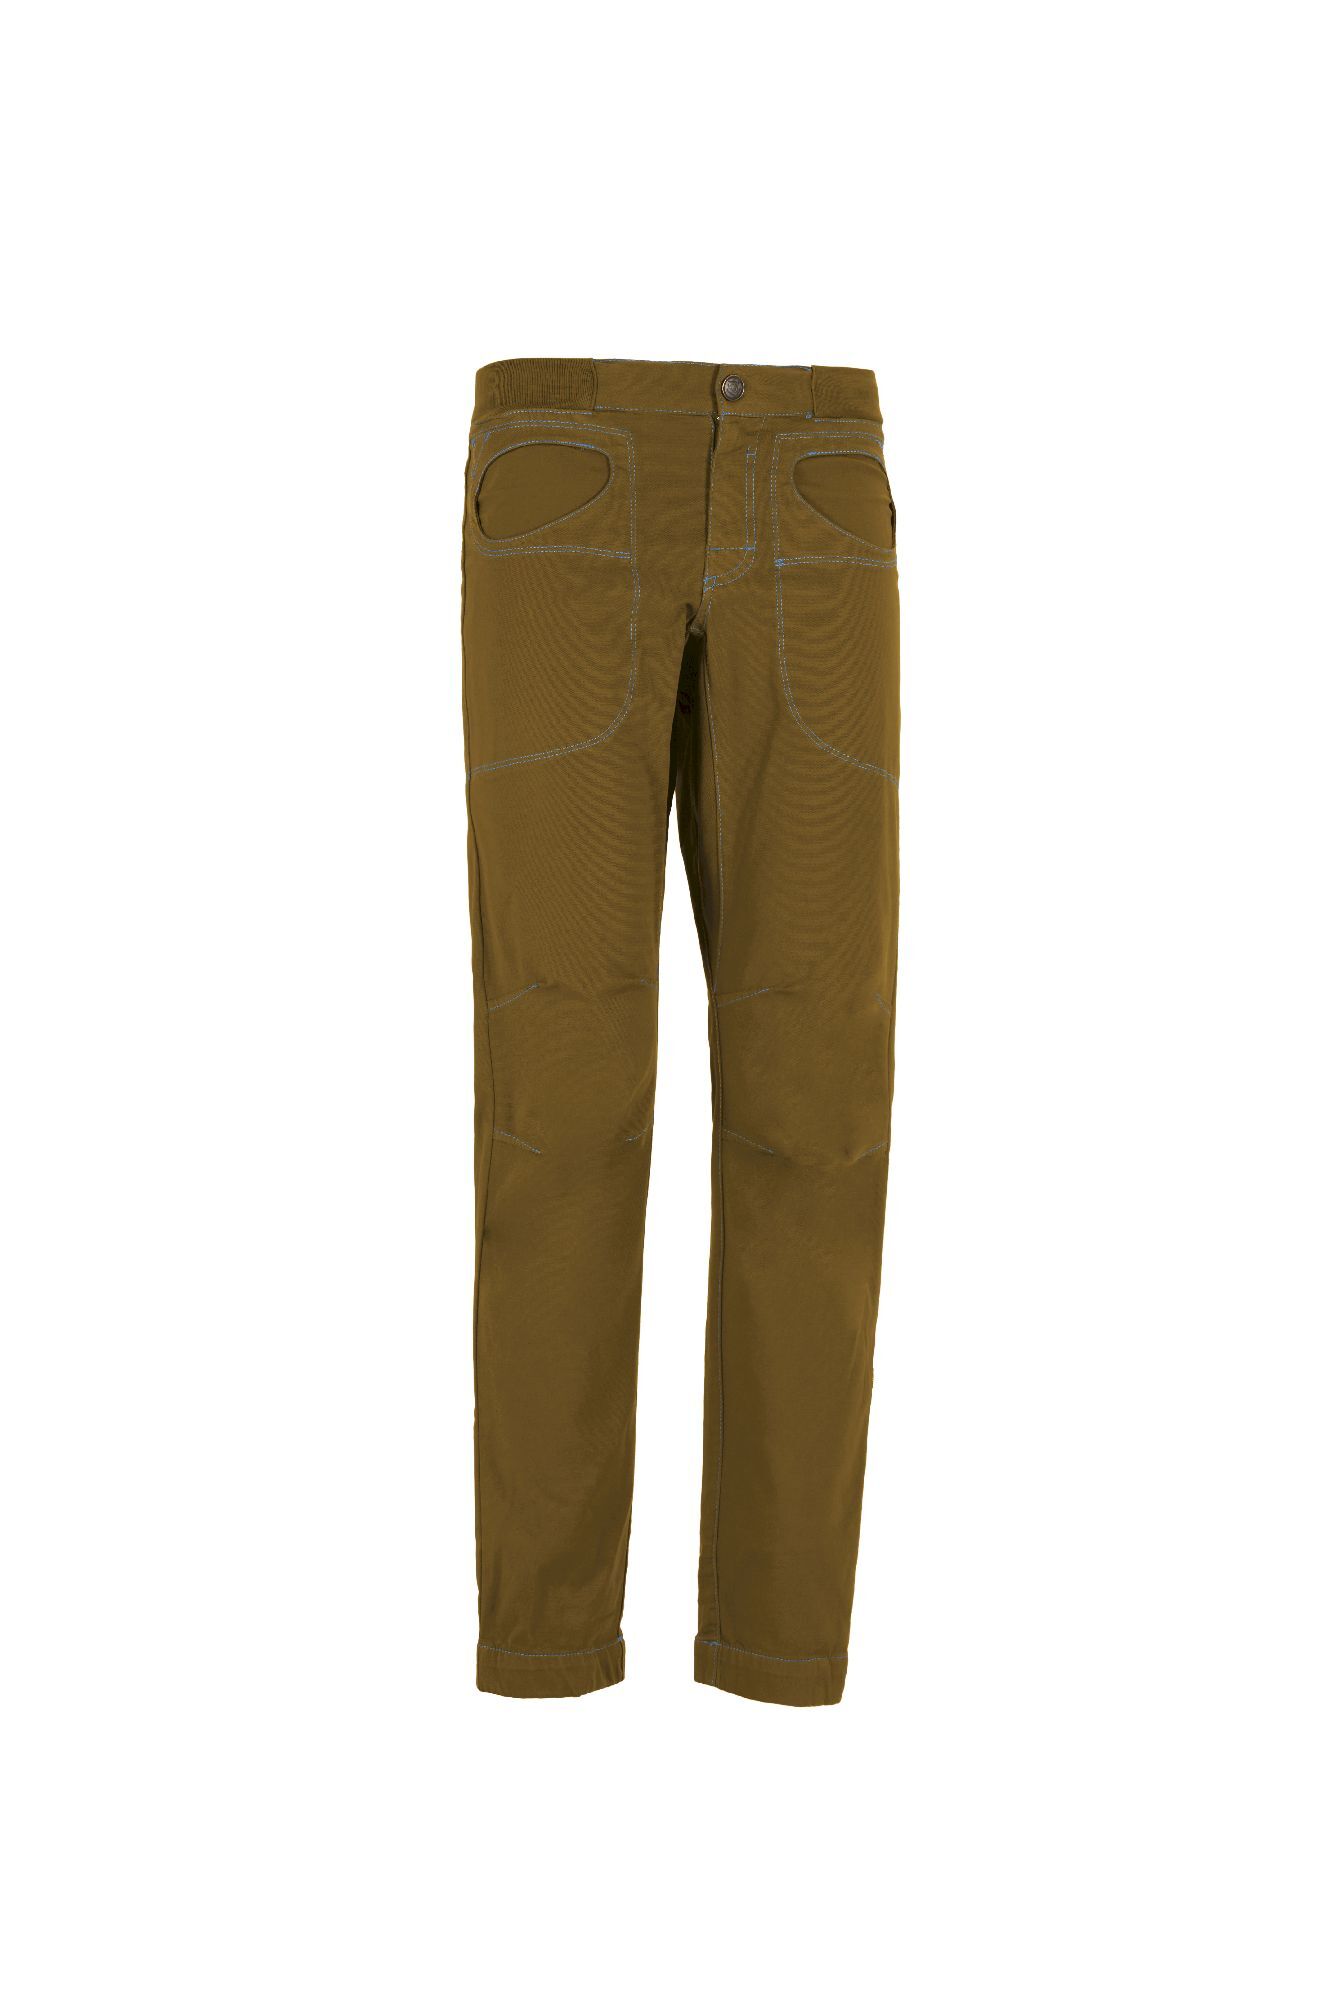 E9 Rondo Artrock 2.4 - Pantalones de escalada - Hombre | Hardloop